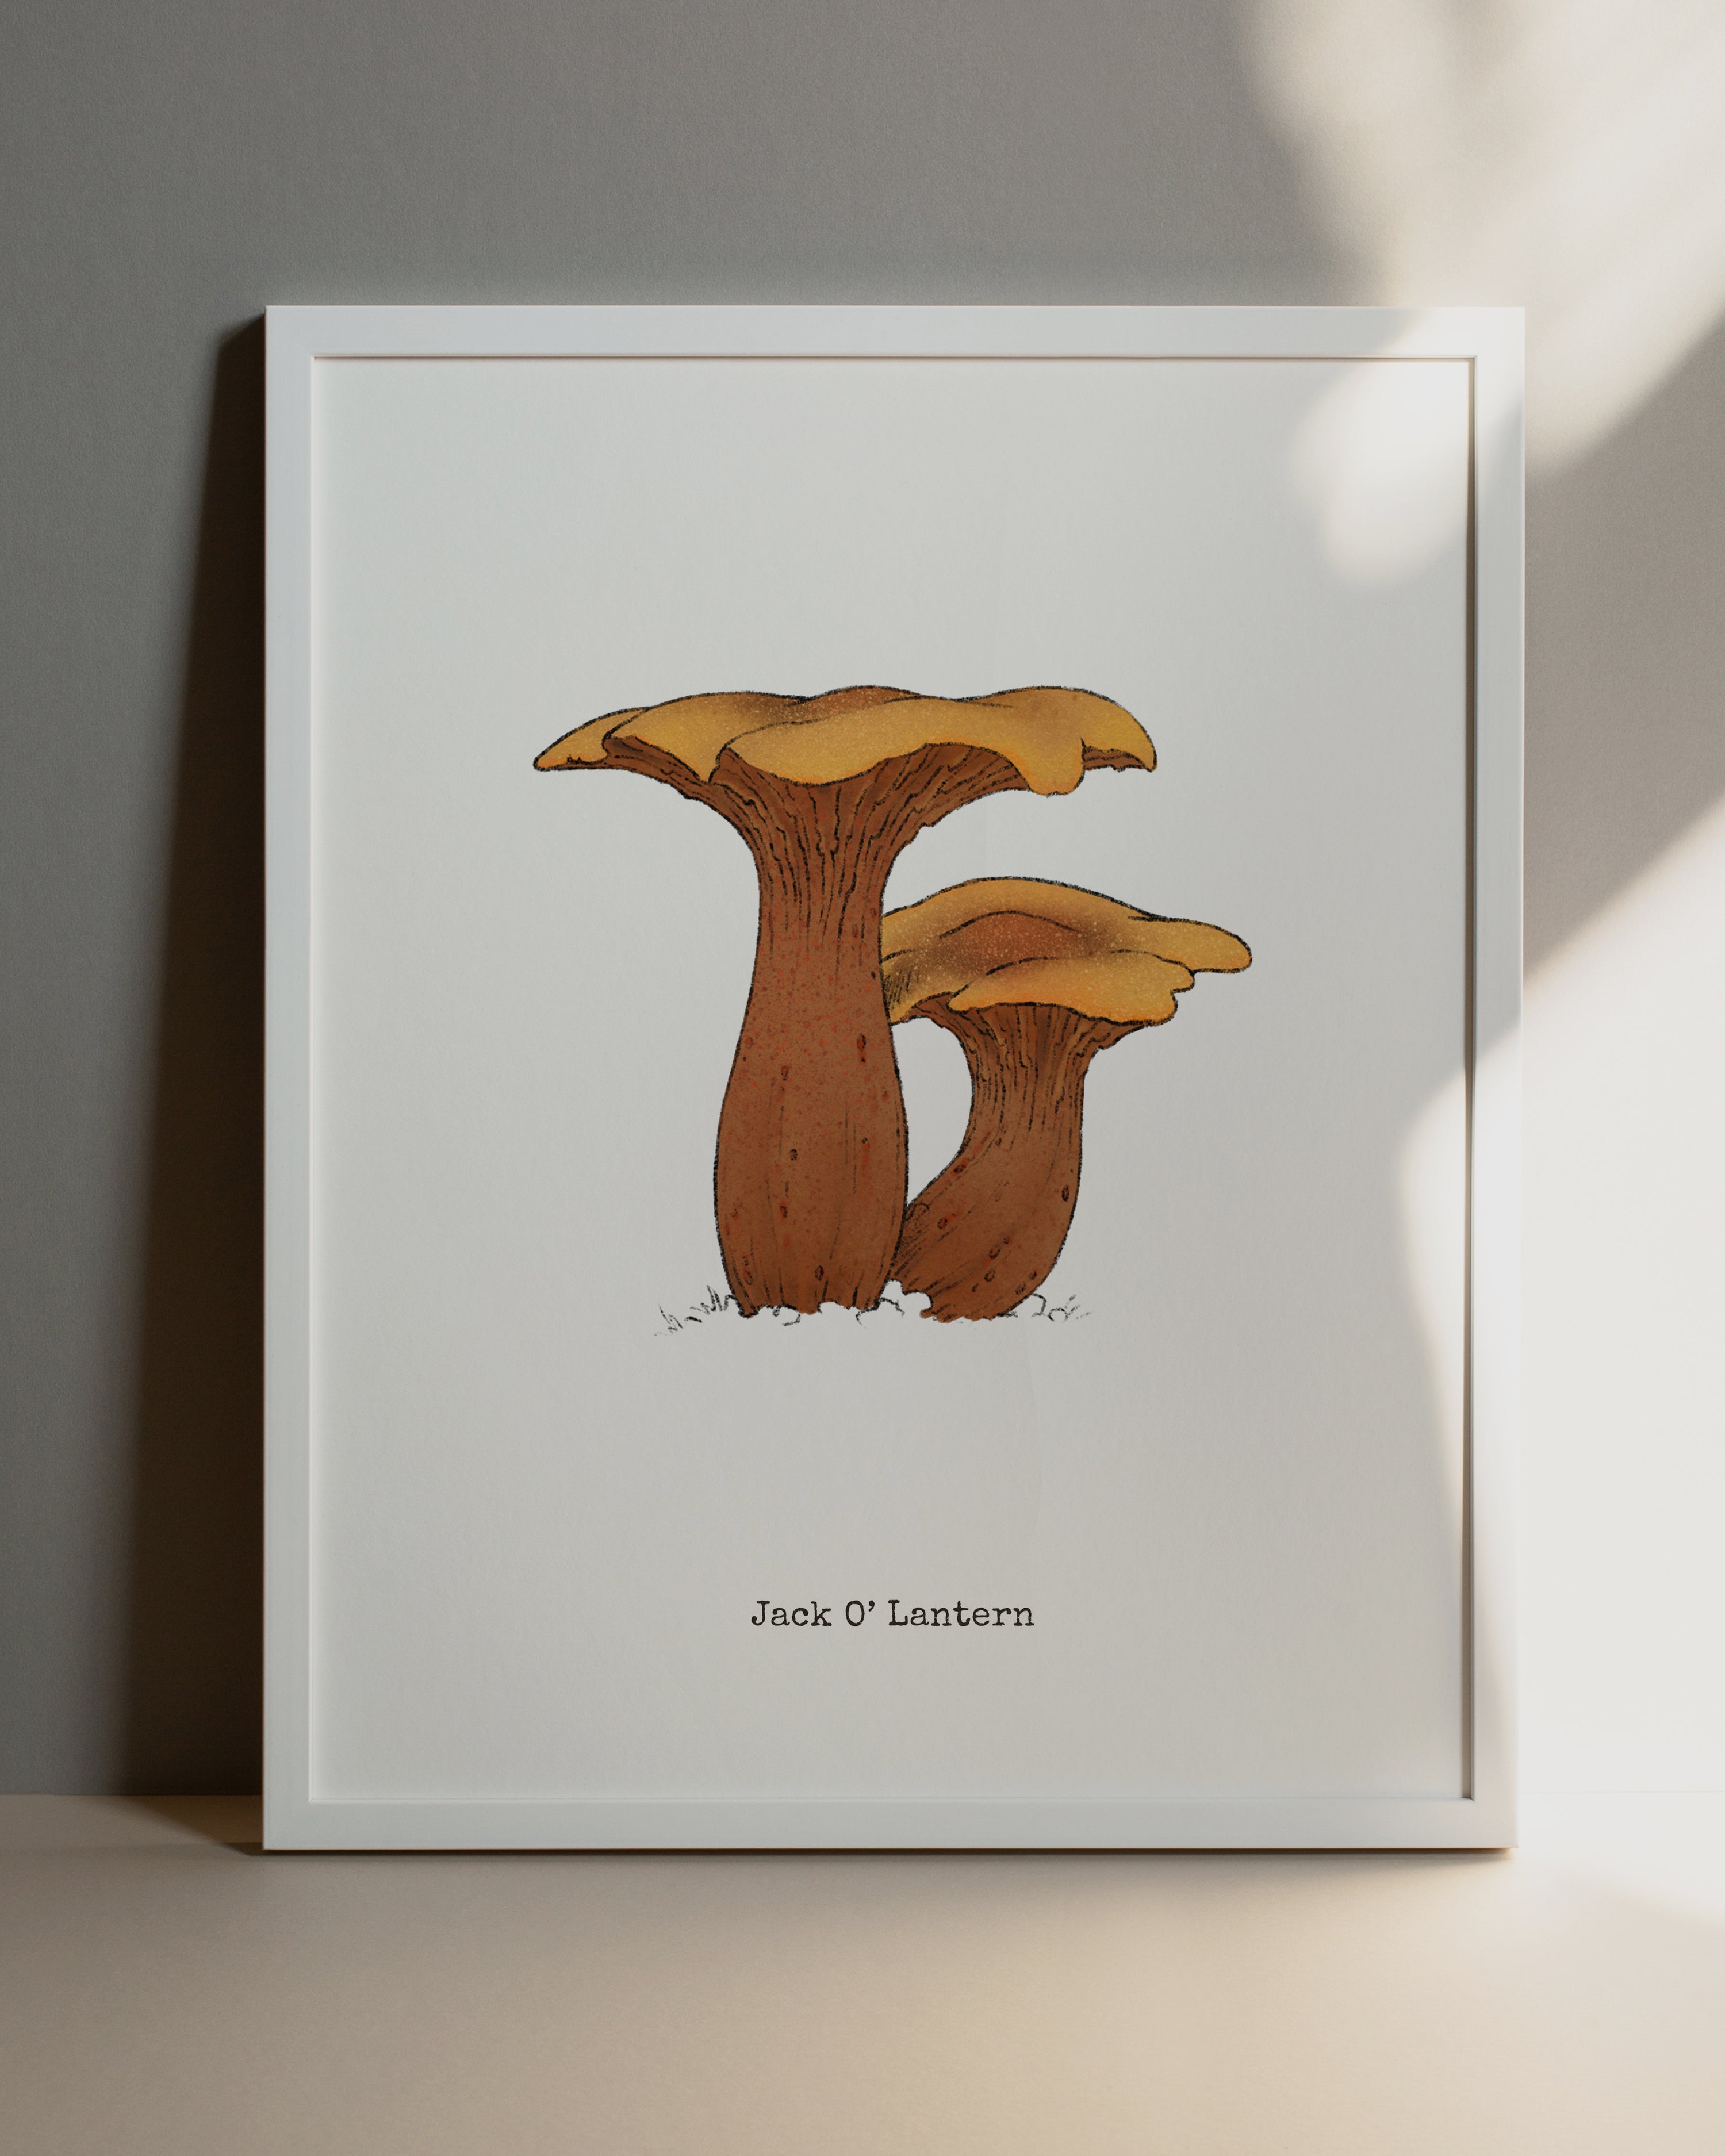 "Jack O'Lantern" by Catherine Hébert - Jack O'Lantern Mushroom Art Print